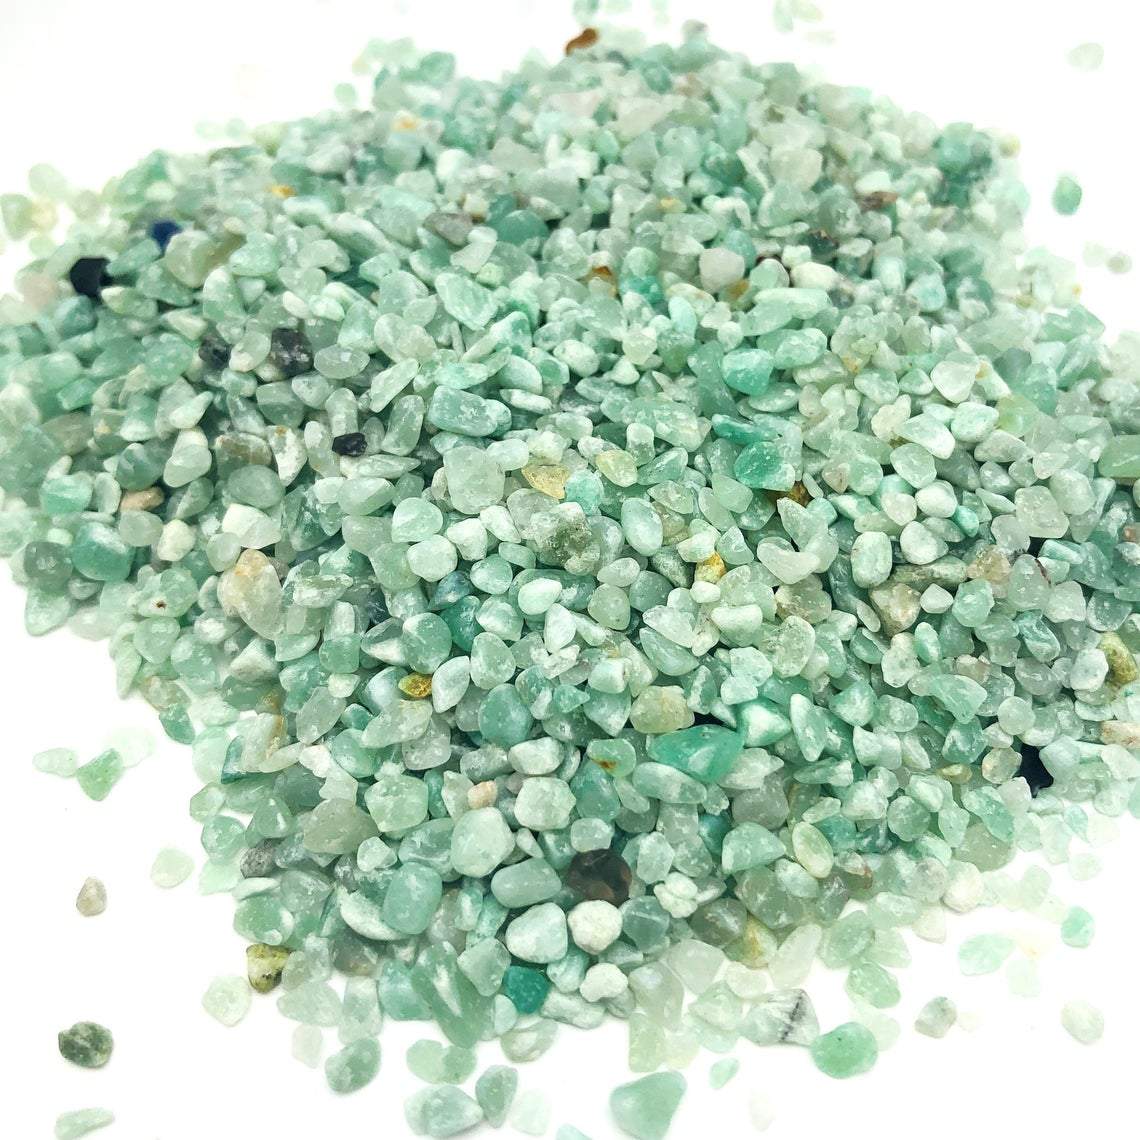 Green Quartz Tiny Chip Stones in a pile